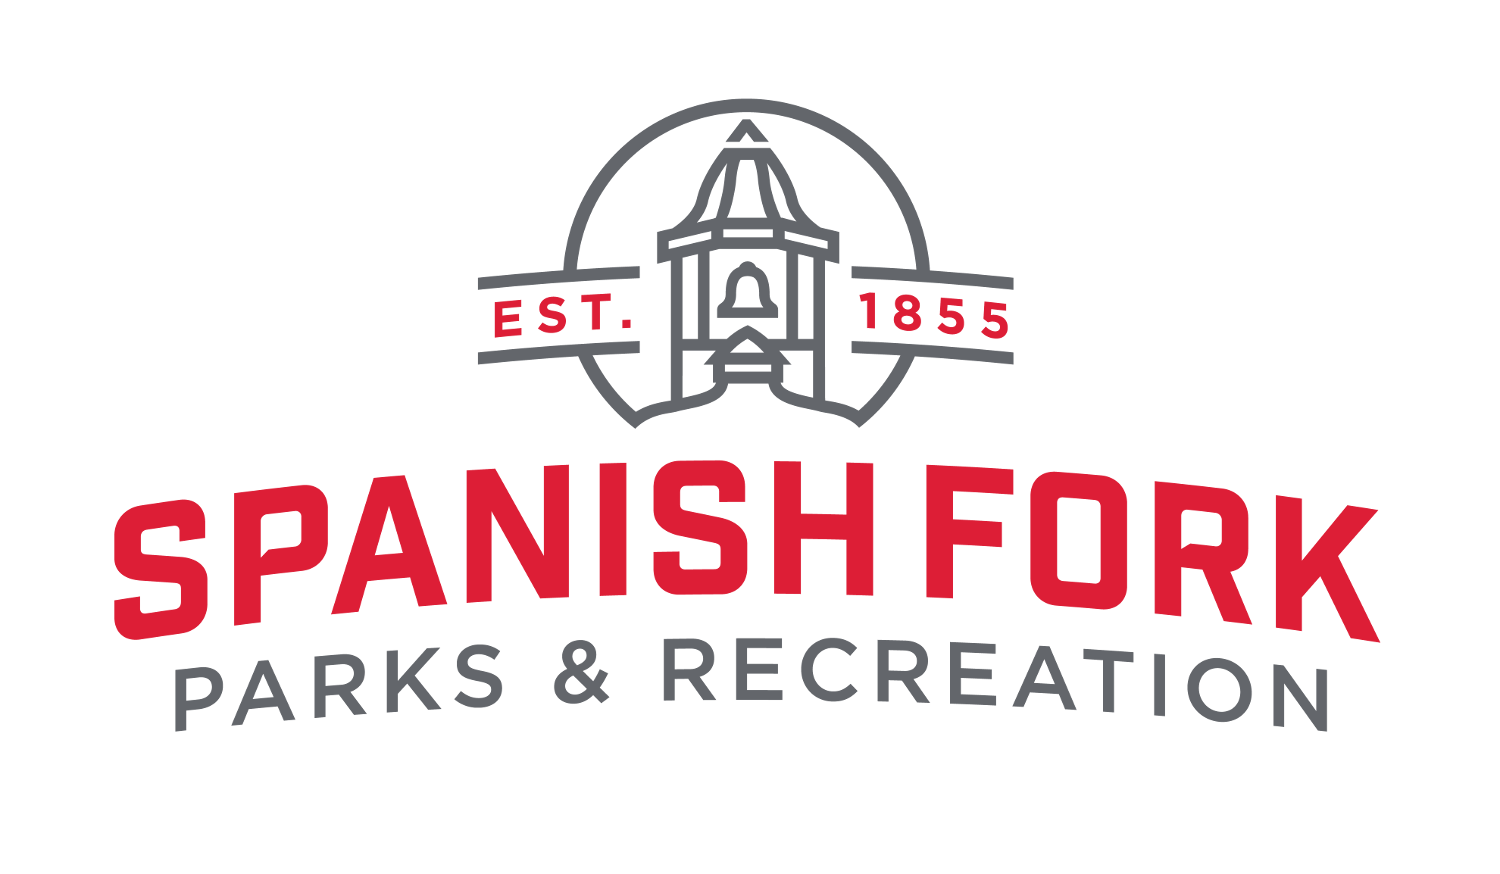 Parks & Recreation logo